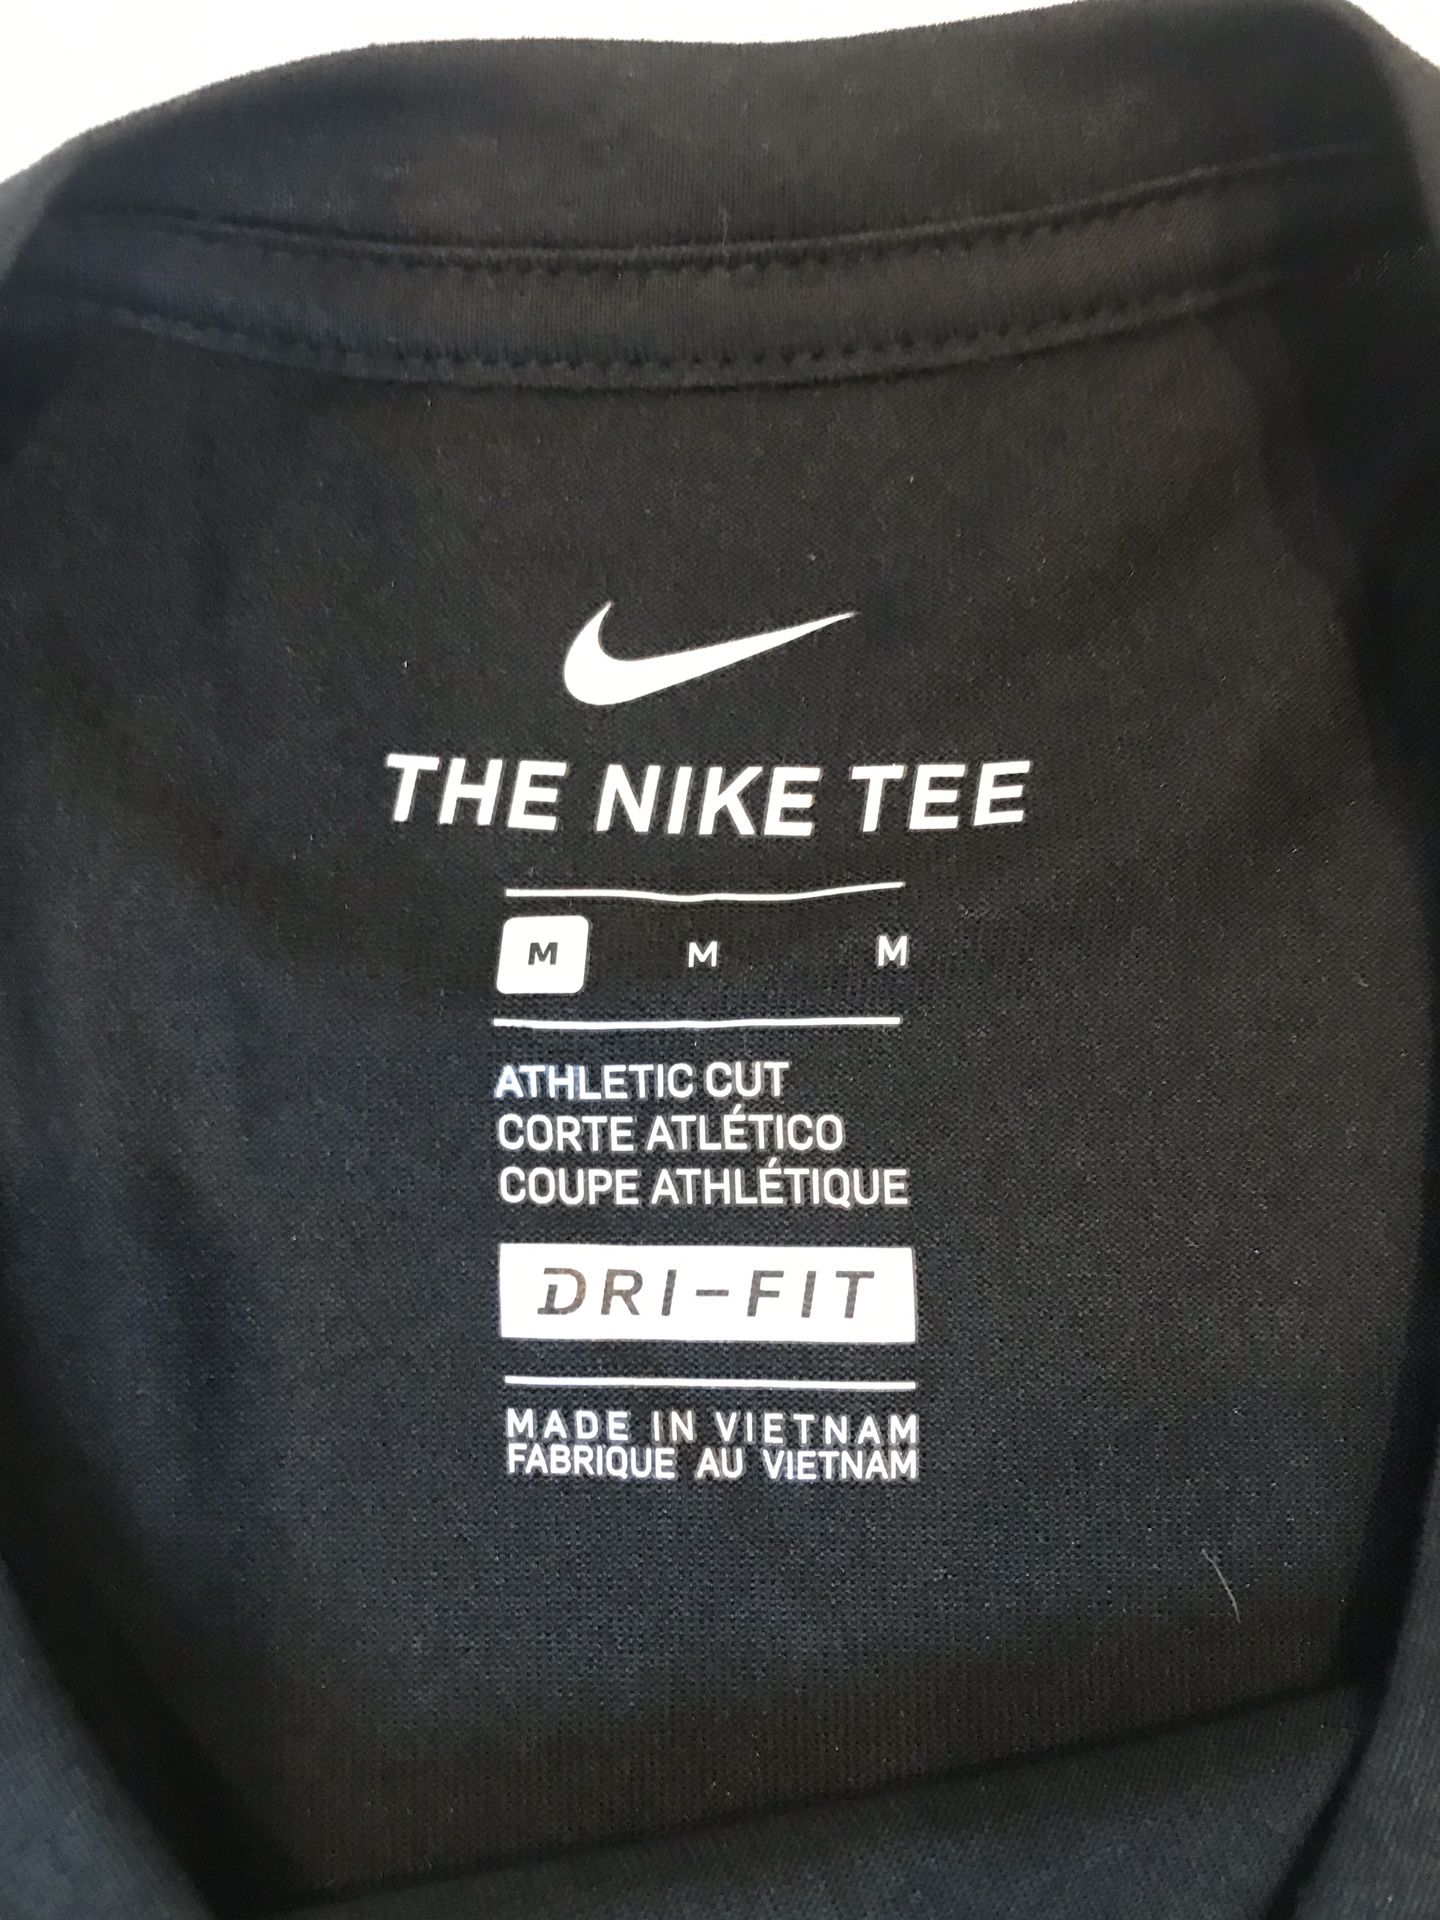 Buy Men's Nike Dri  ArvindShops - nike air stab brown black dress code  roblox - FIT Formula 1 Clothing Online